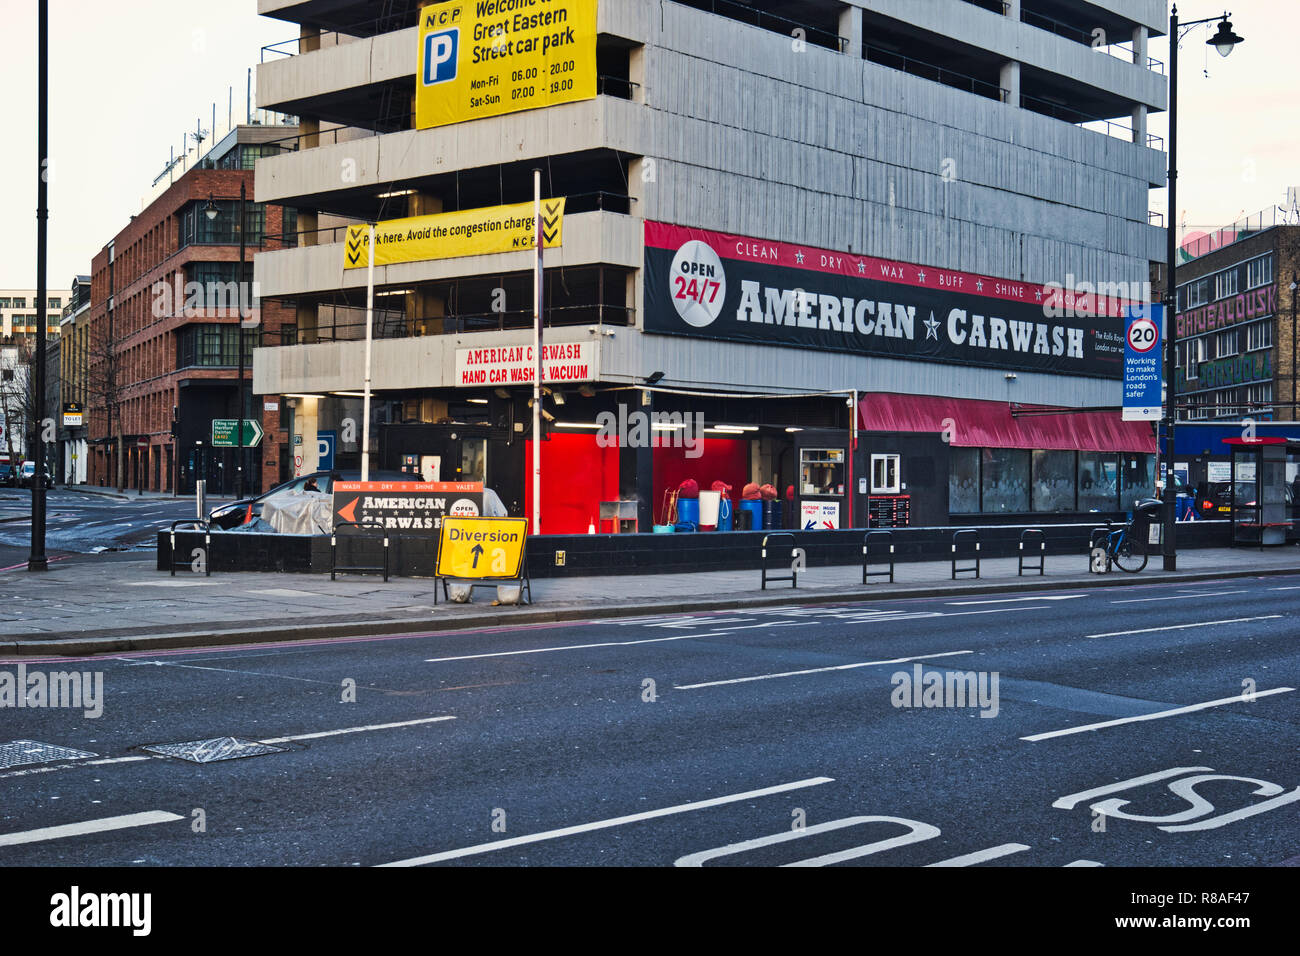 American Carwash Company dans la région de Great Eastern Street, Londres, Angleterre Banque D'Images